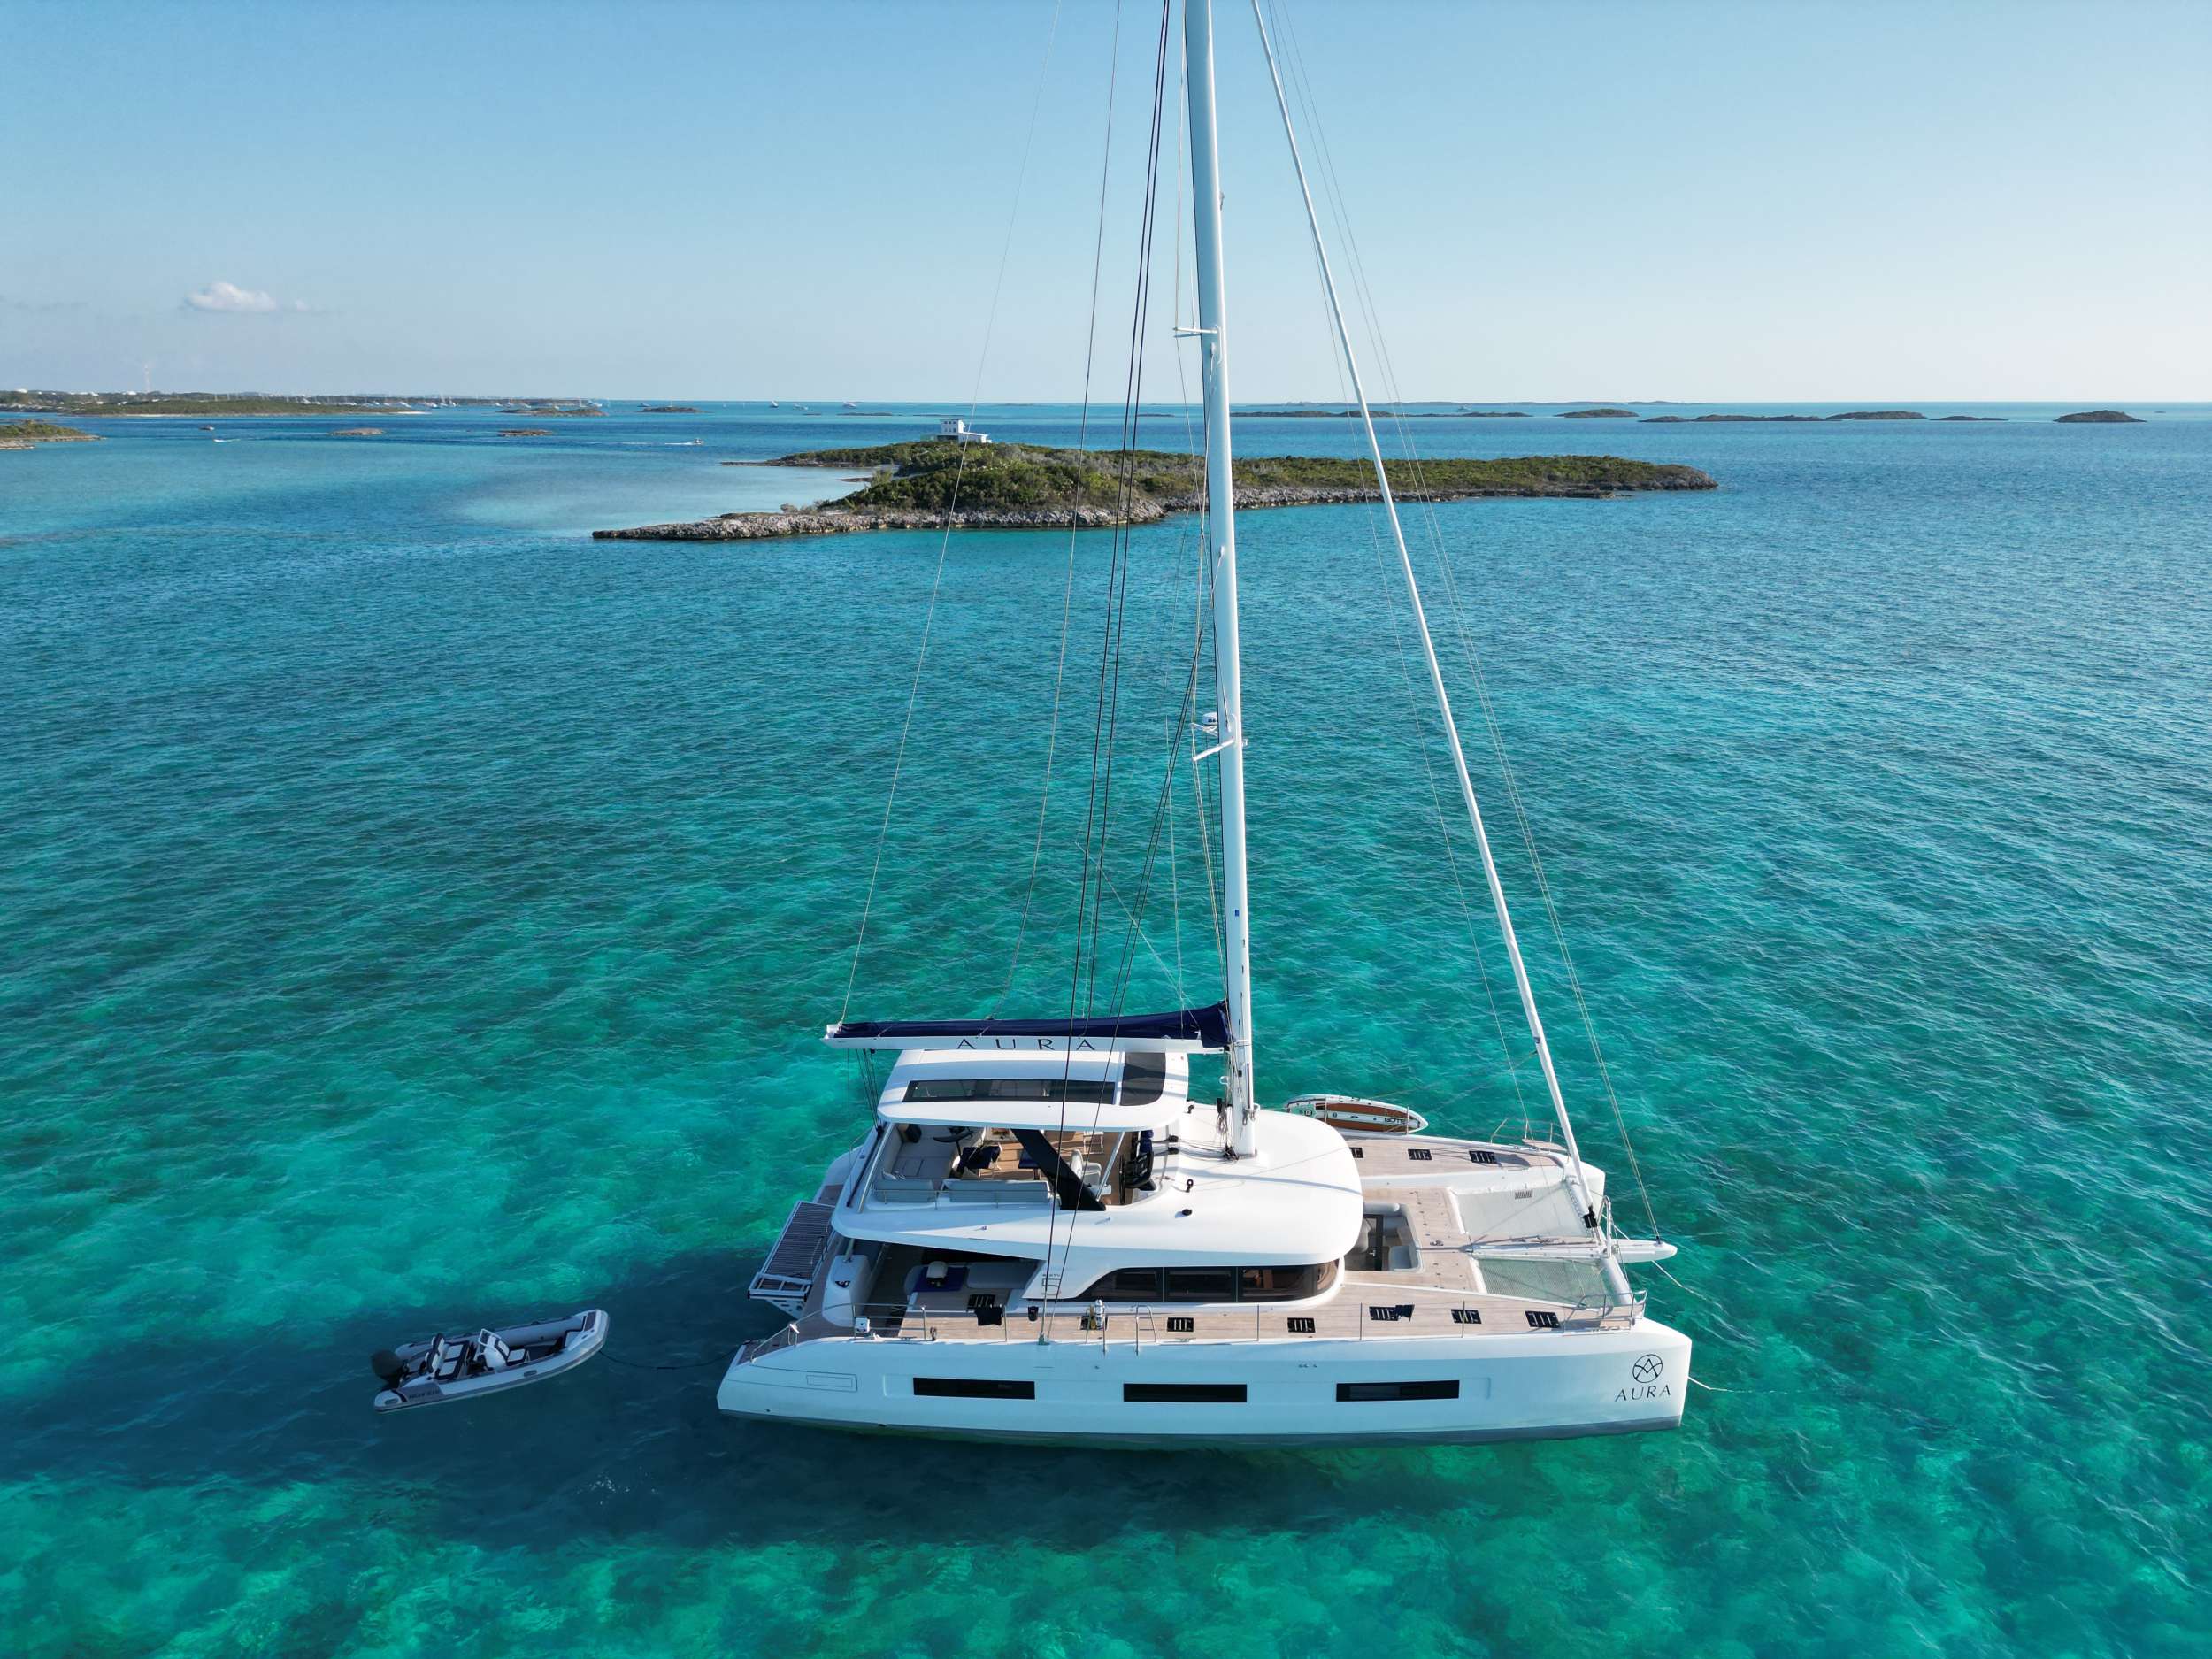 Aura Catamaran Yacht Charter floating in the Caribbean